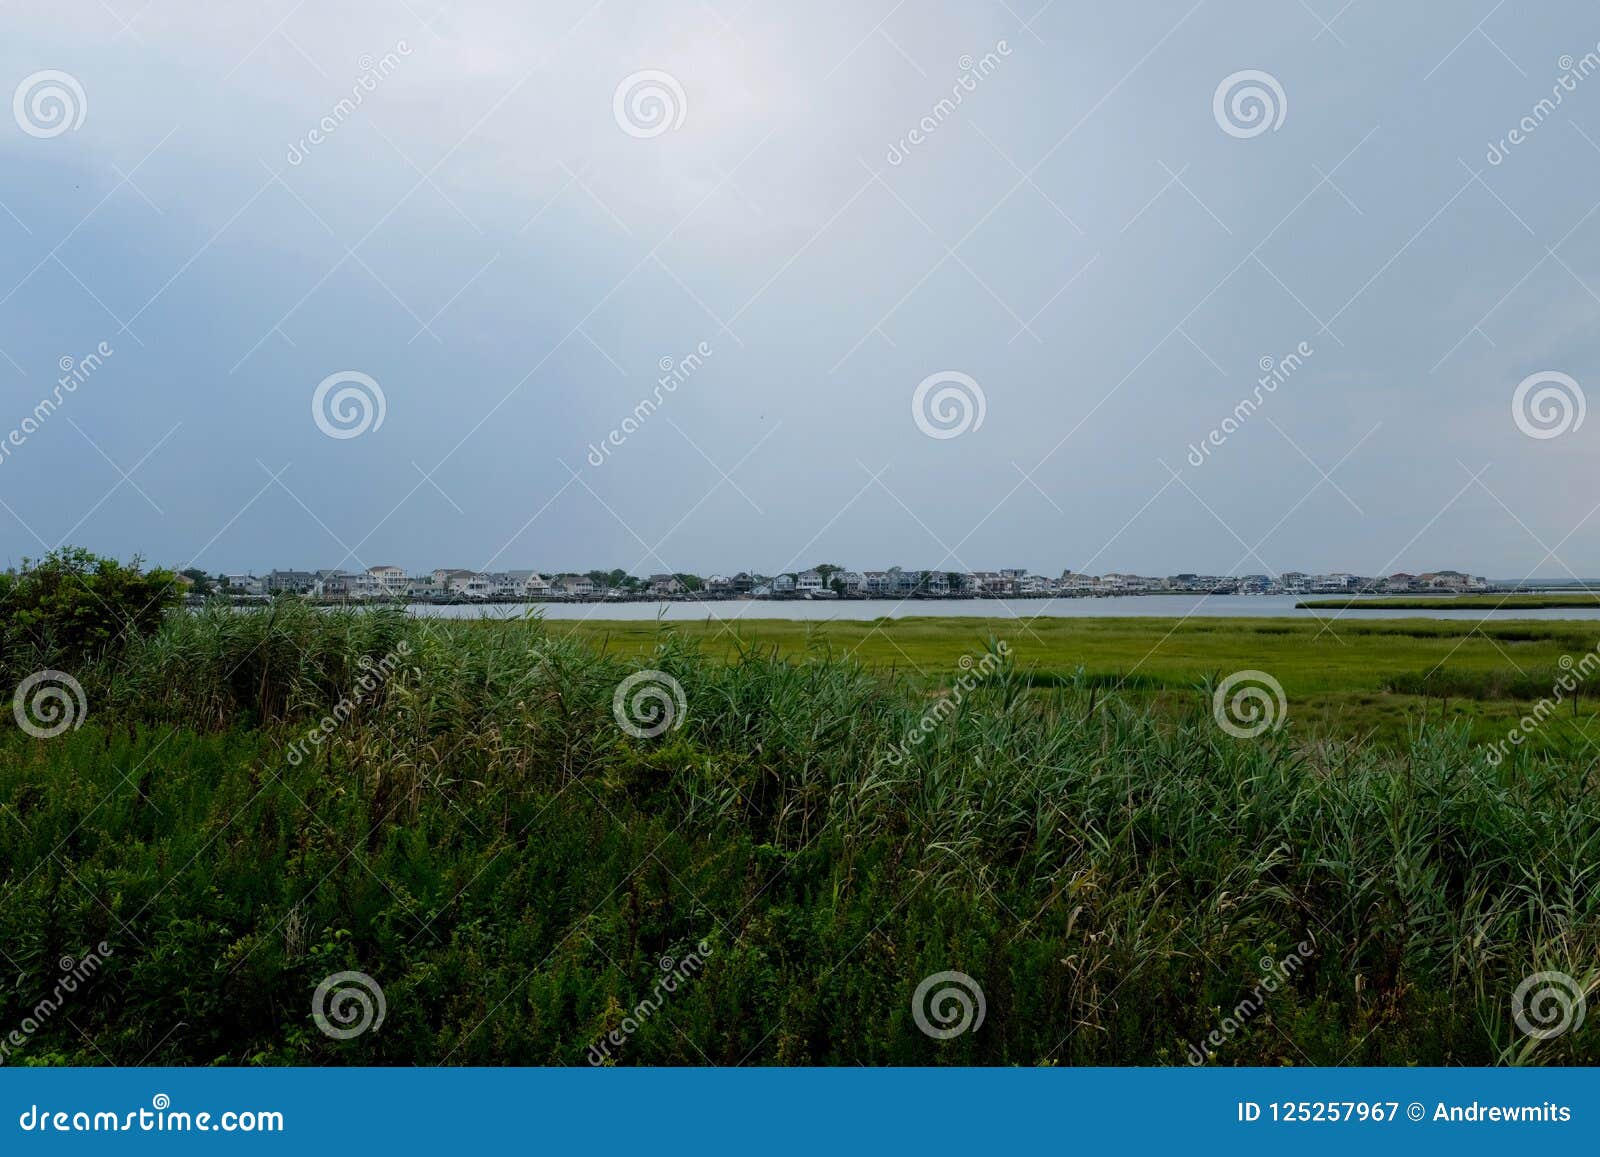 brigantine bay marsh and tidal wetlands on new jersey coast